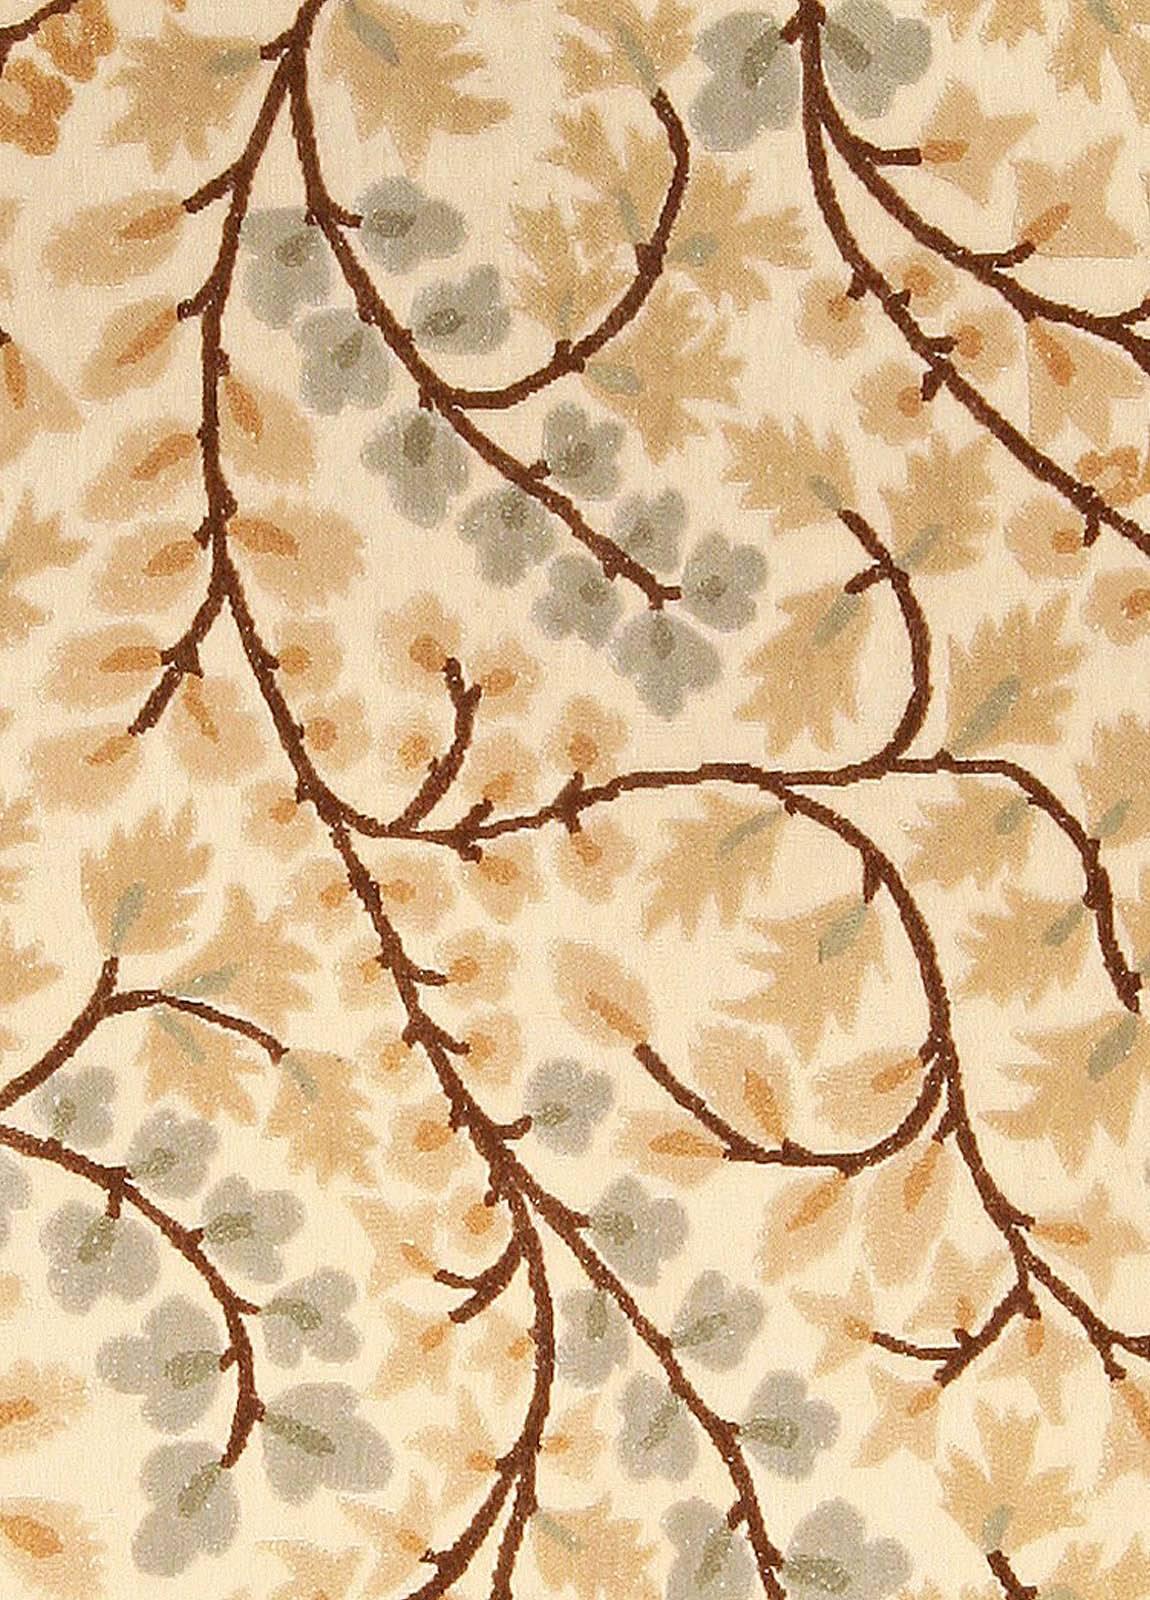 Modern Maple design rug by Doris Leslie Blau
Size: 10'0